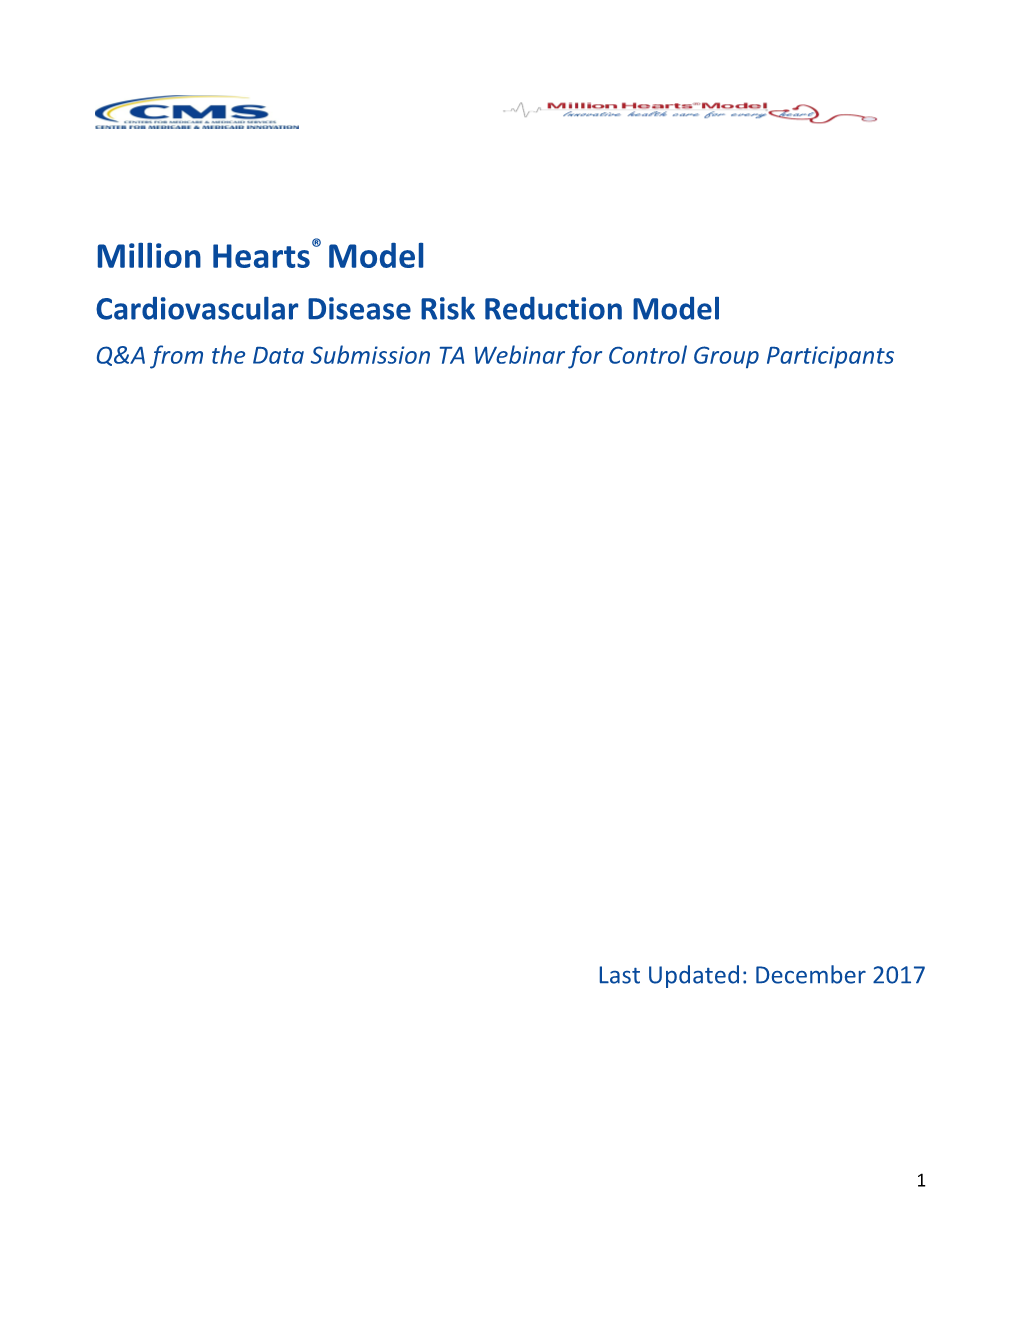 Cardiovascular Disease Risk Reduction Model